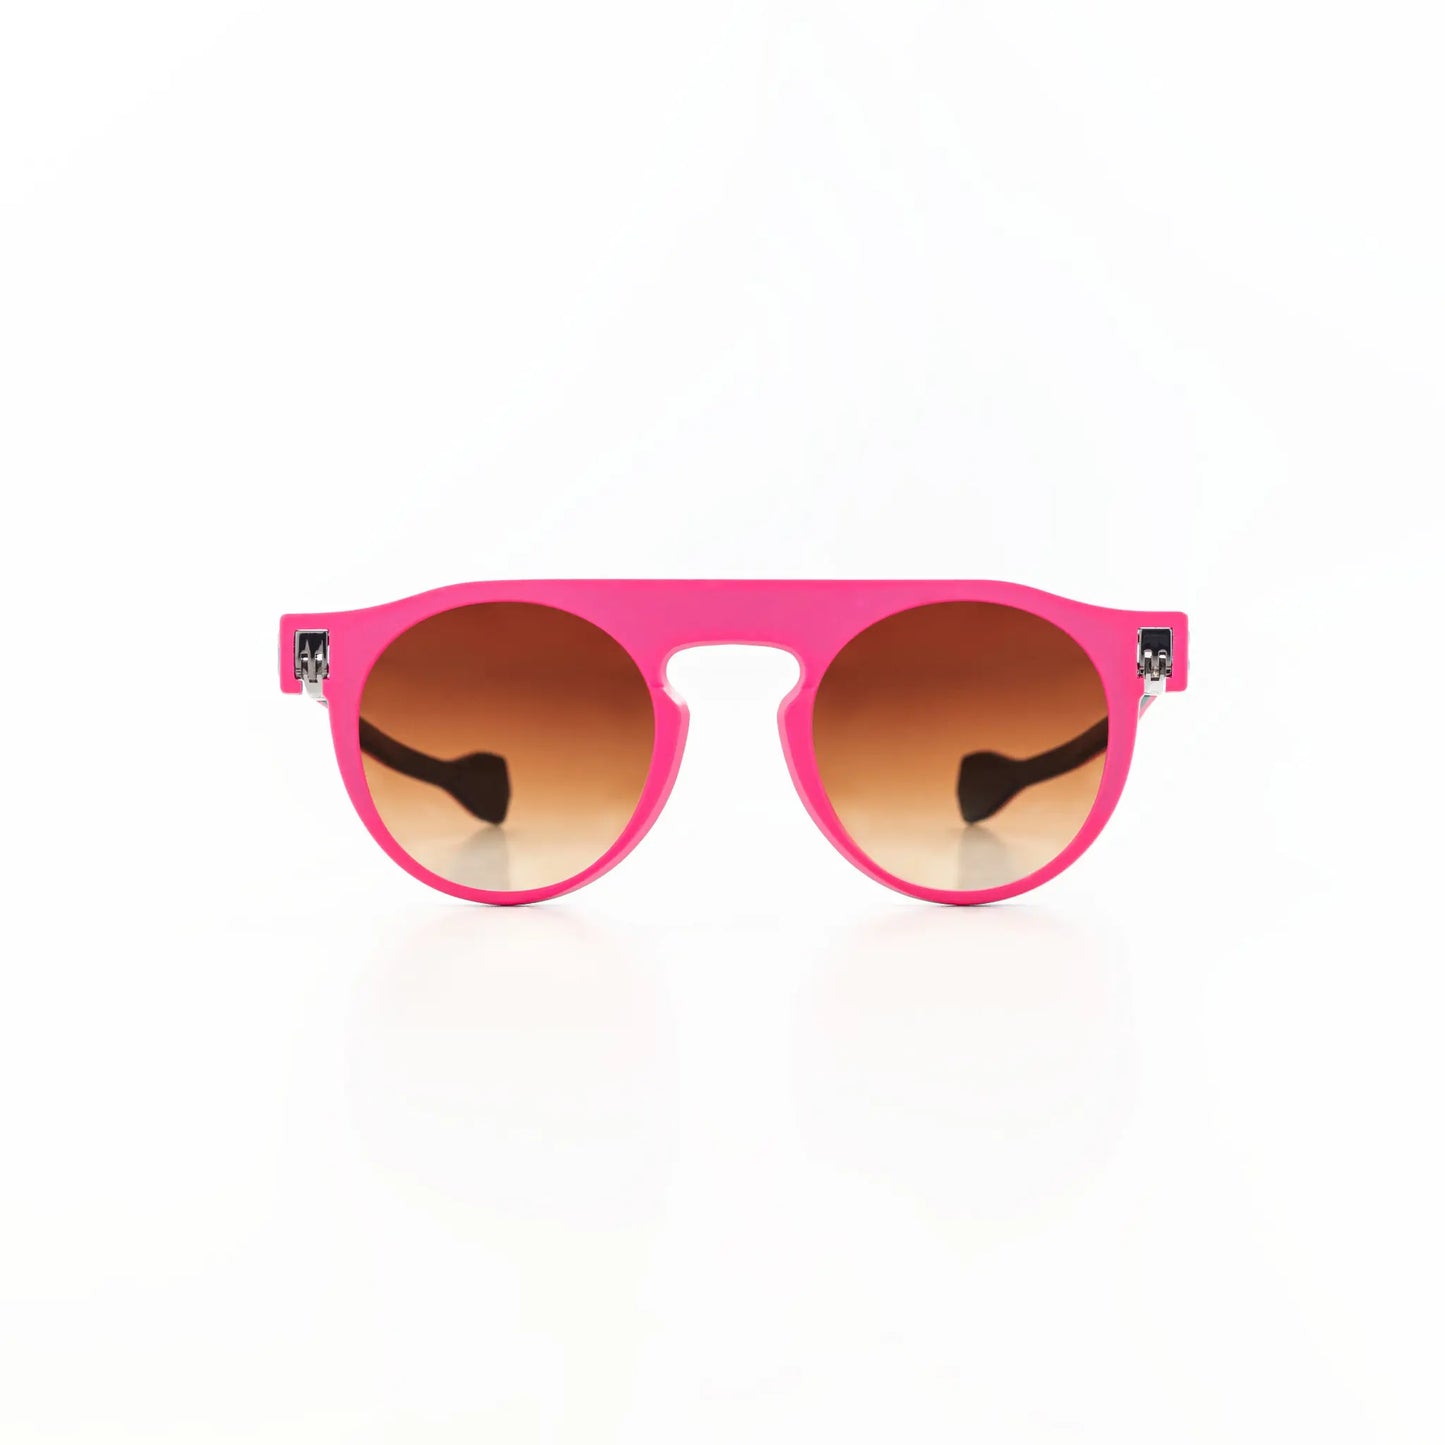 Reverso sunglasses pink & petrol reversible & ultra light front view 1